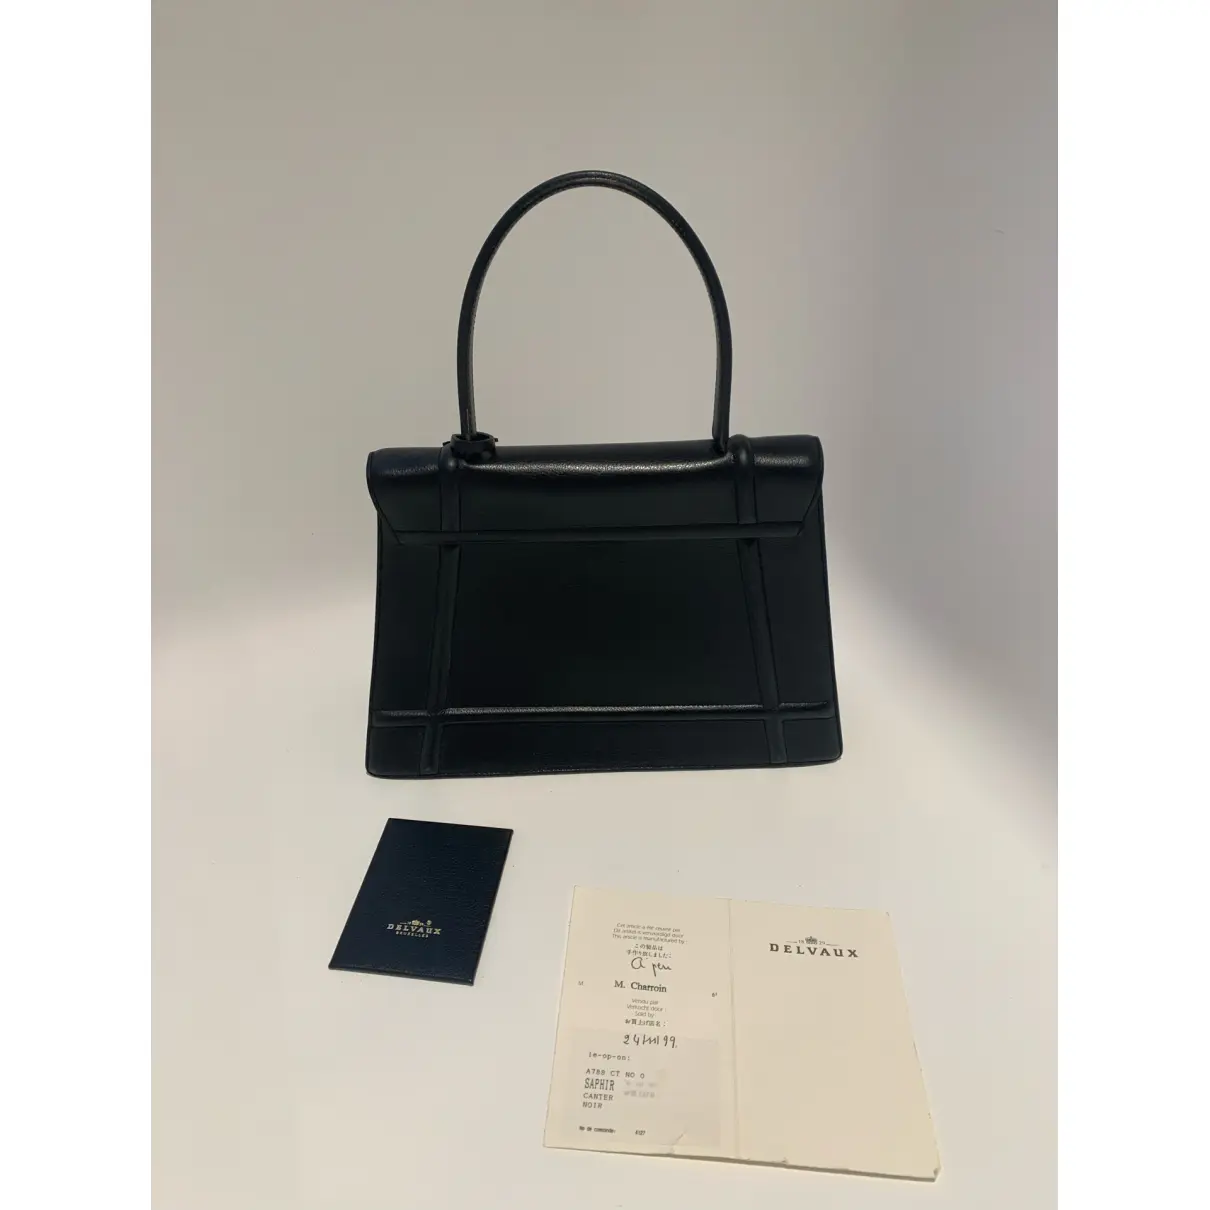 Buy Delvaux Leather handbag online